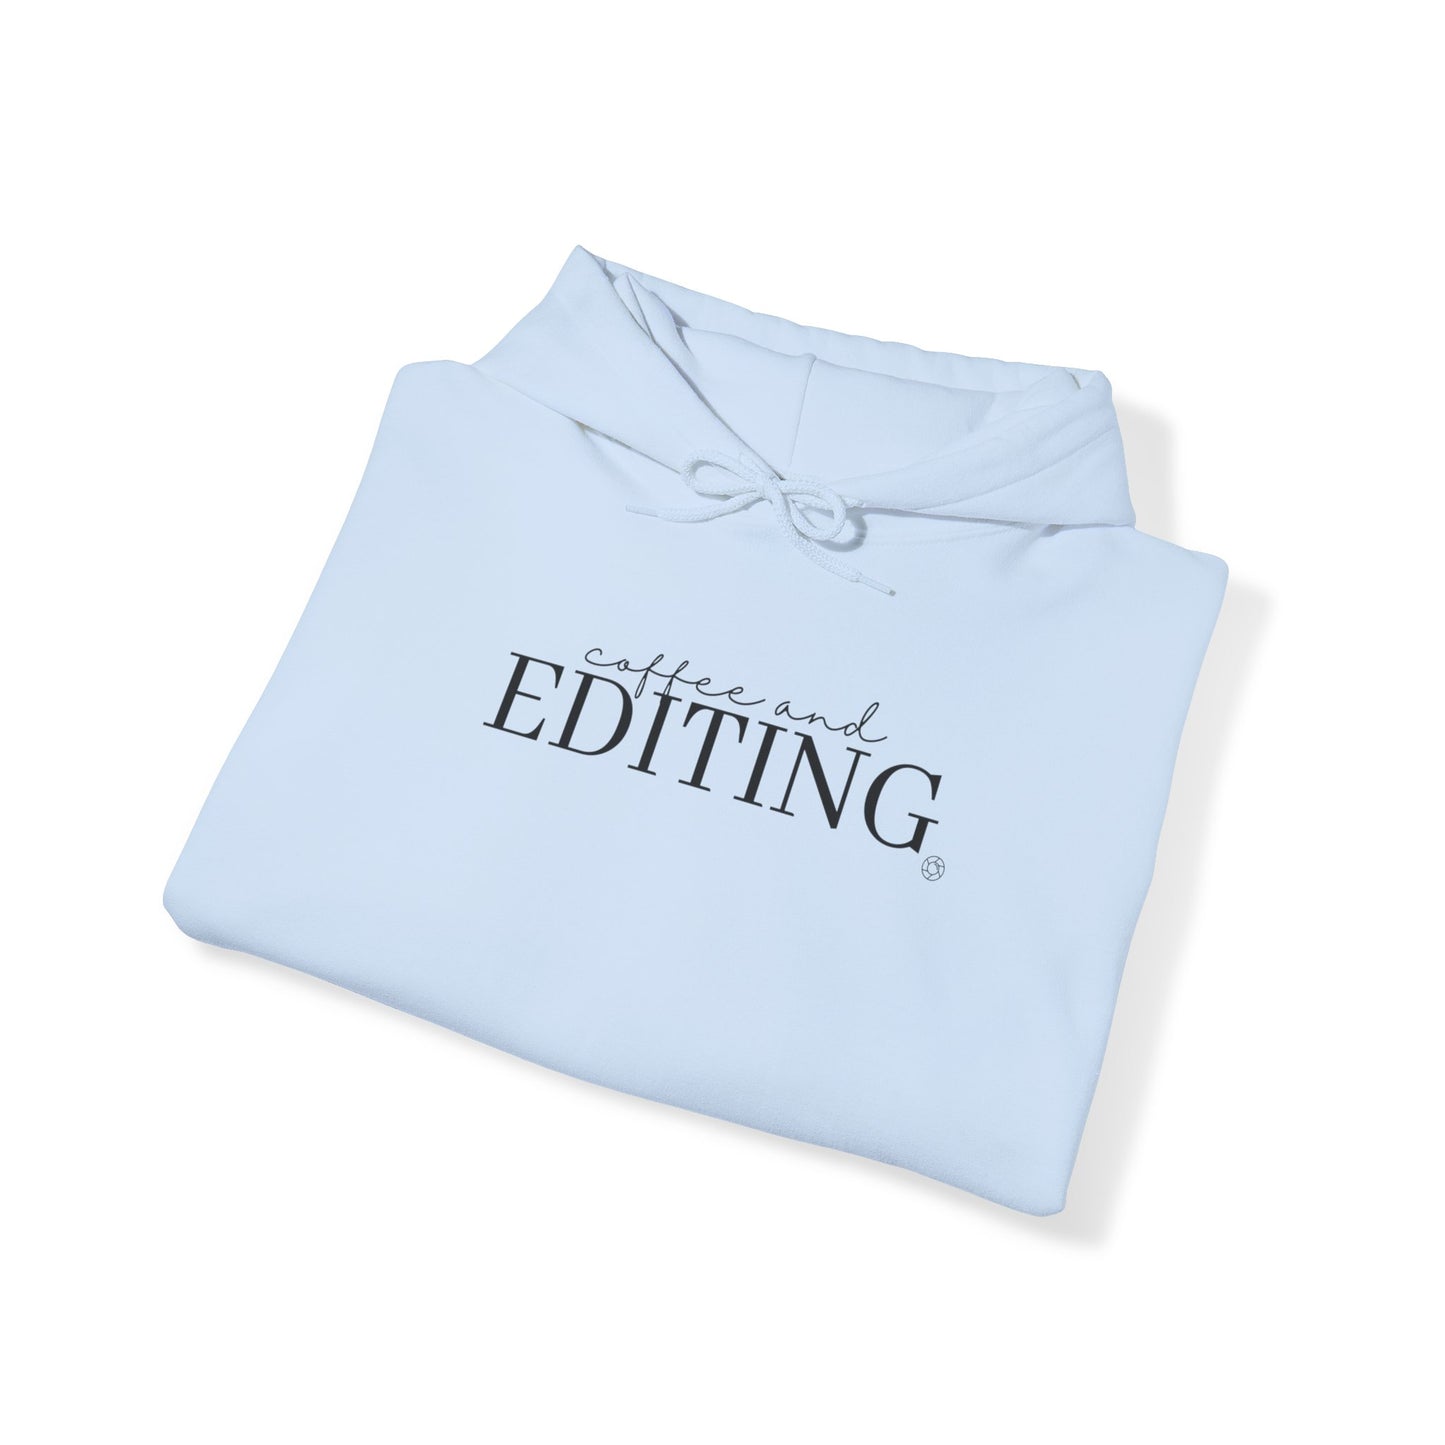 Coffee & Editing (Blk) - Heavy Blend™ Hooded Sweatshirt